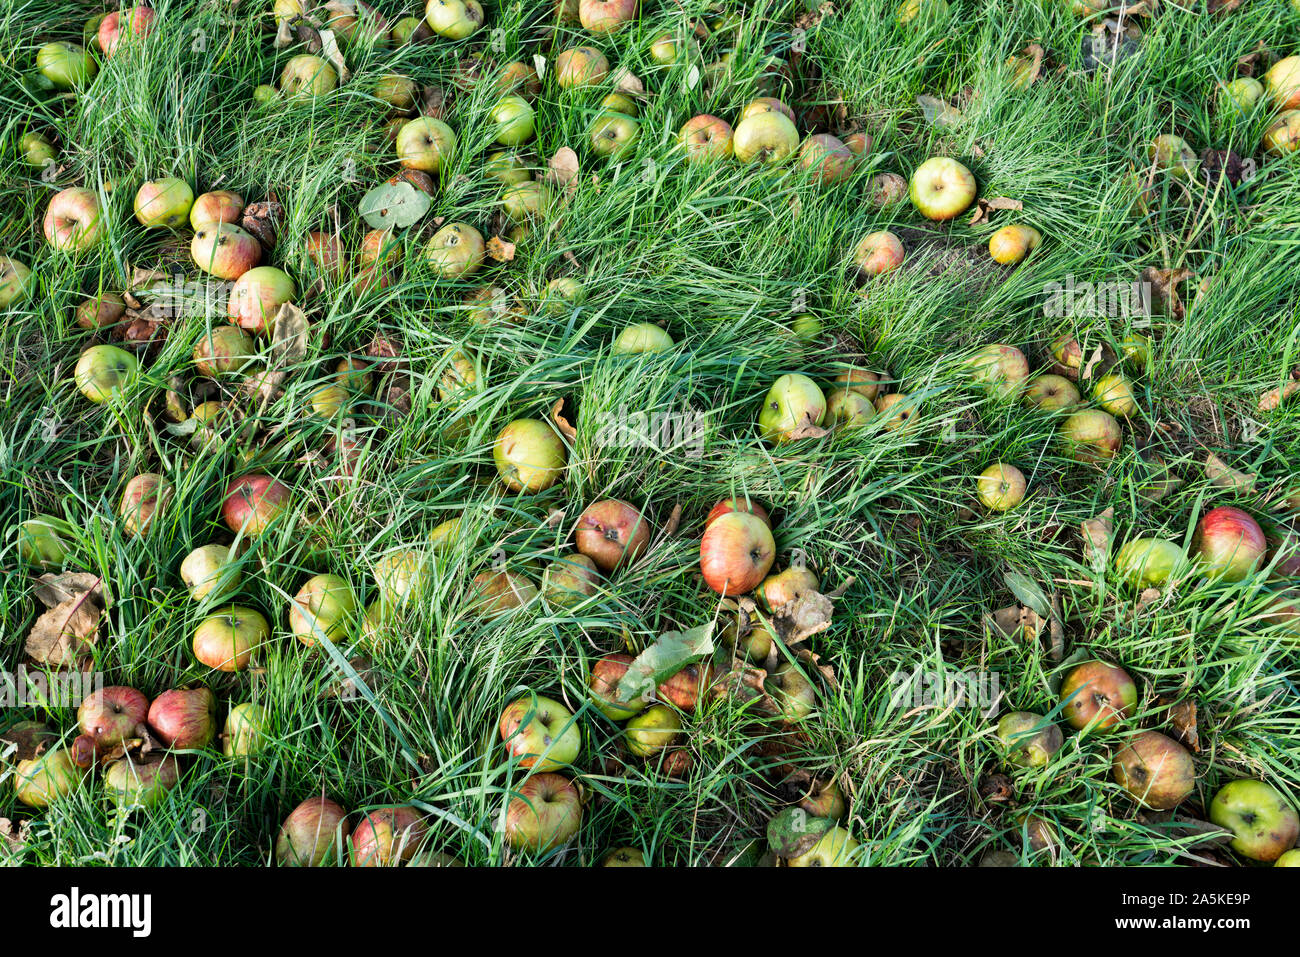 Fallen apples, Germany, Europe Stock Photo